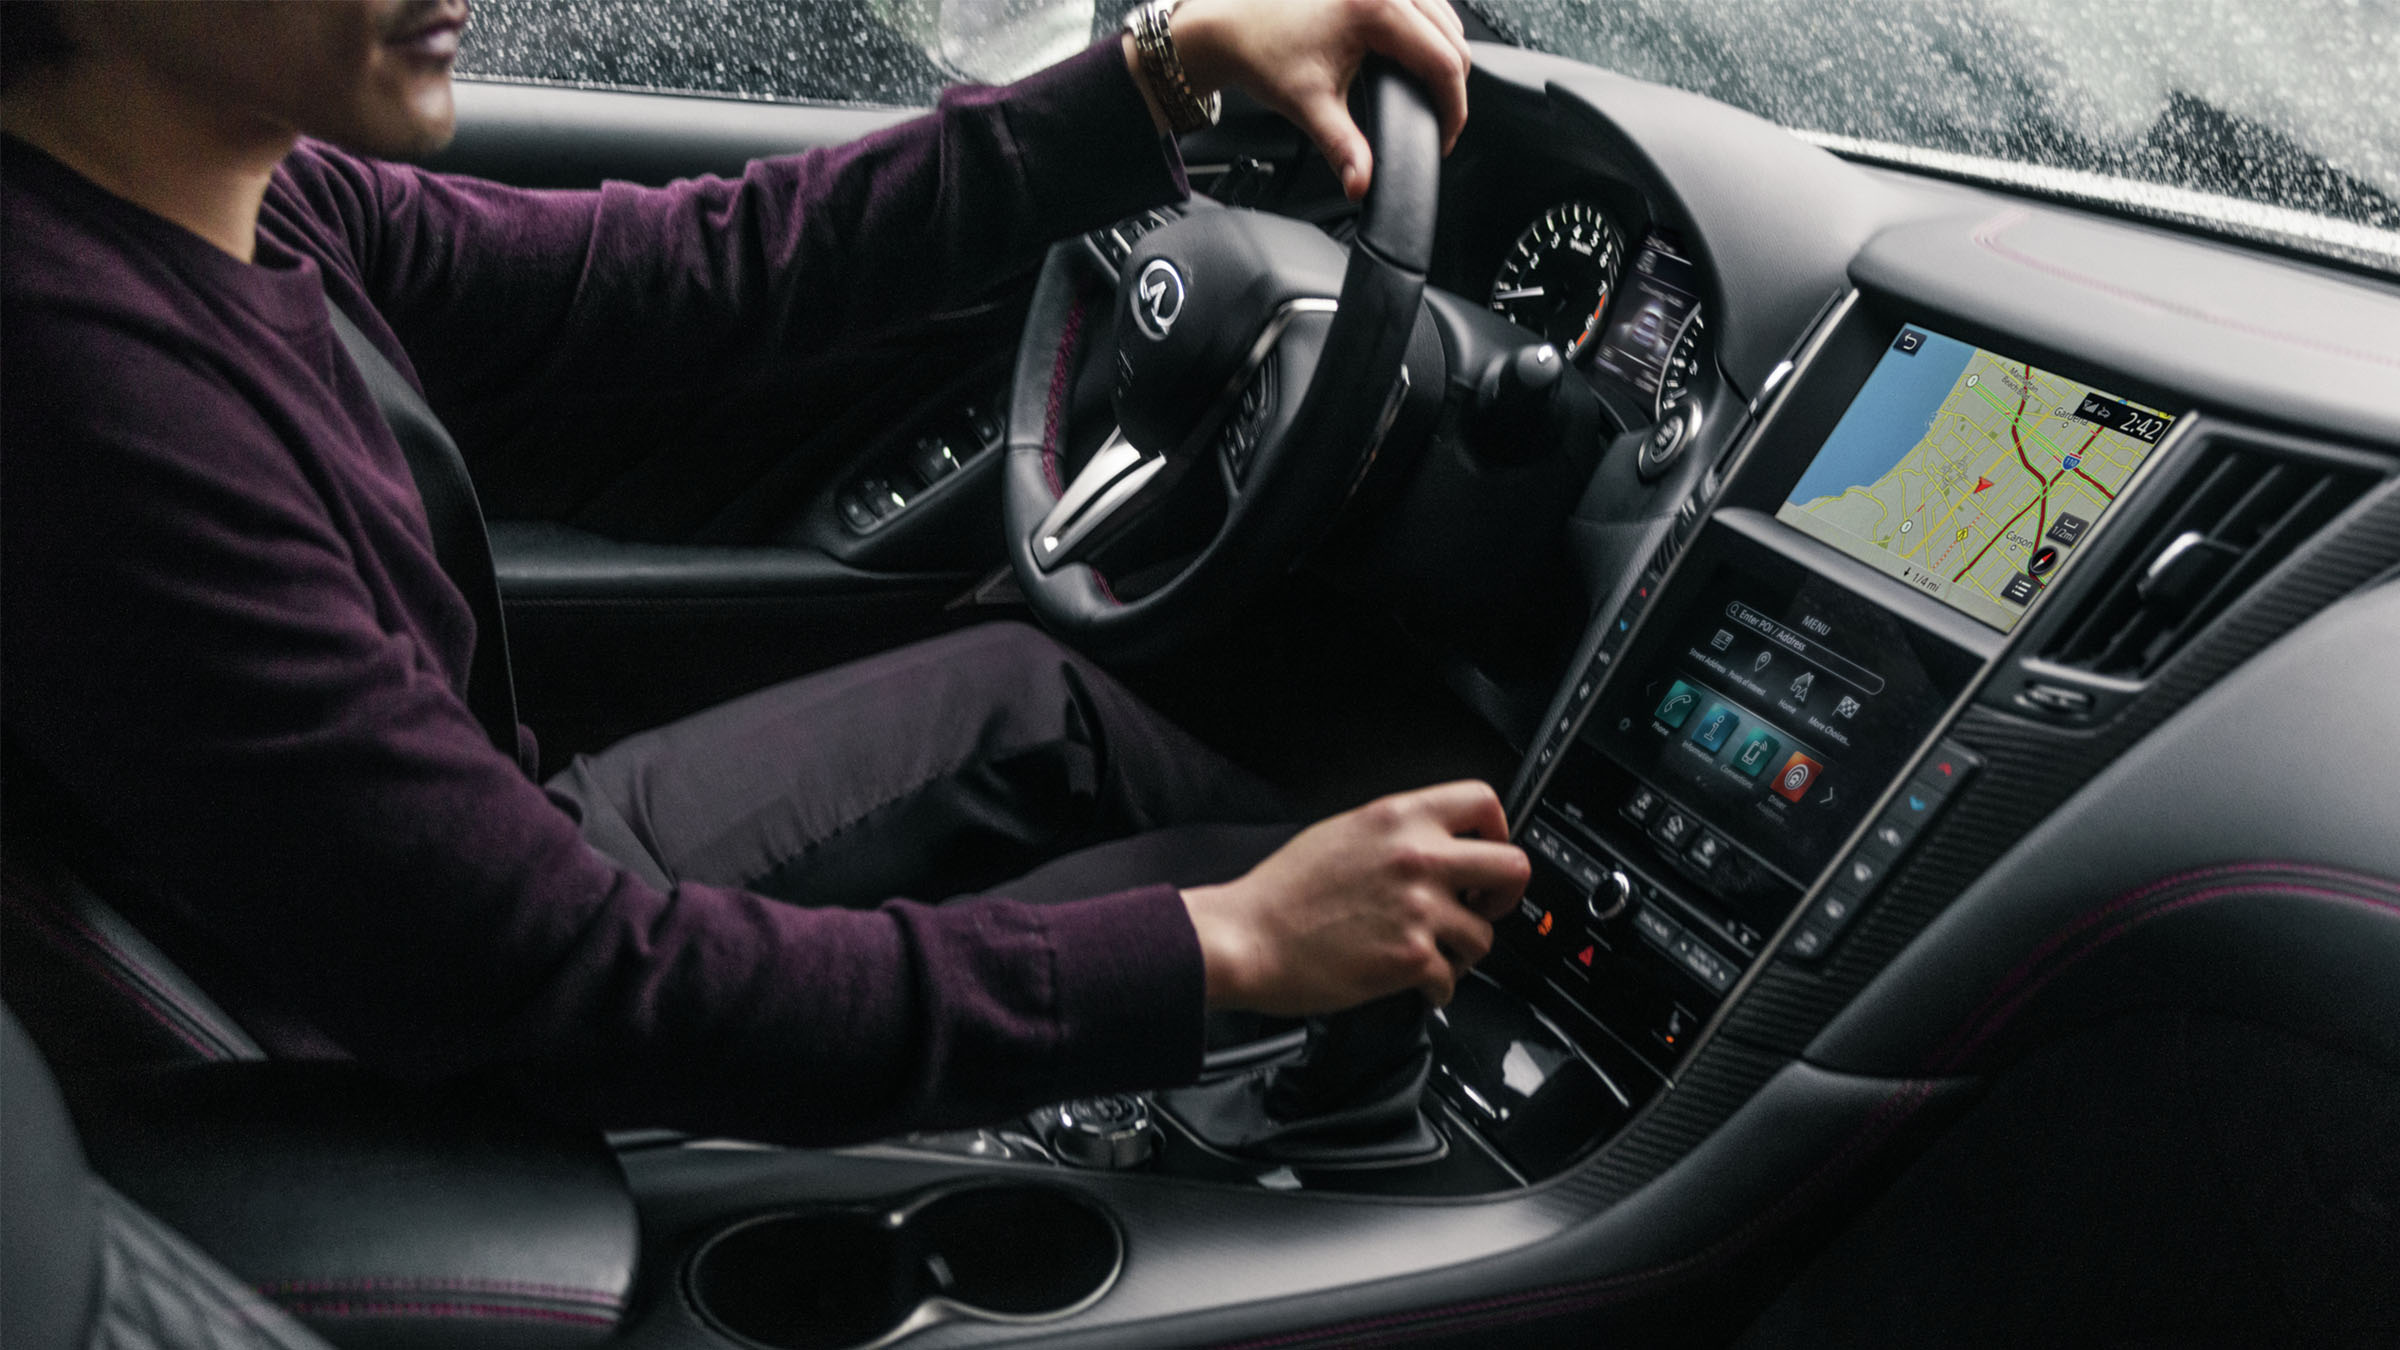 2022 INFINITI Q50 sedan interior middle console and steering wheel.